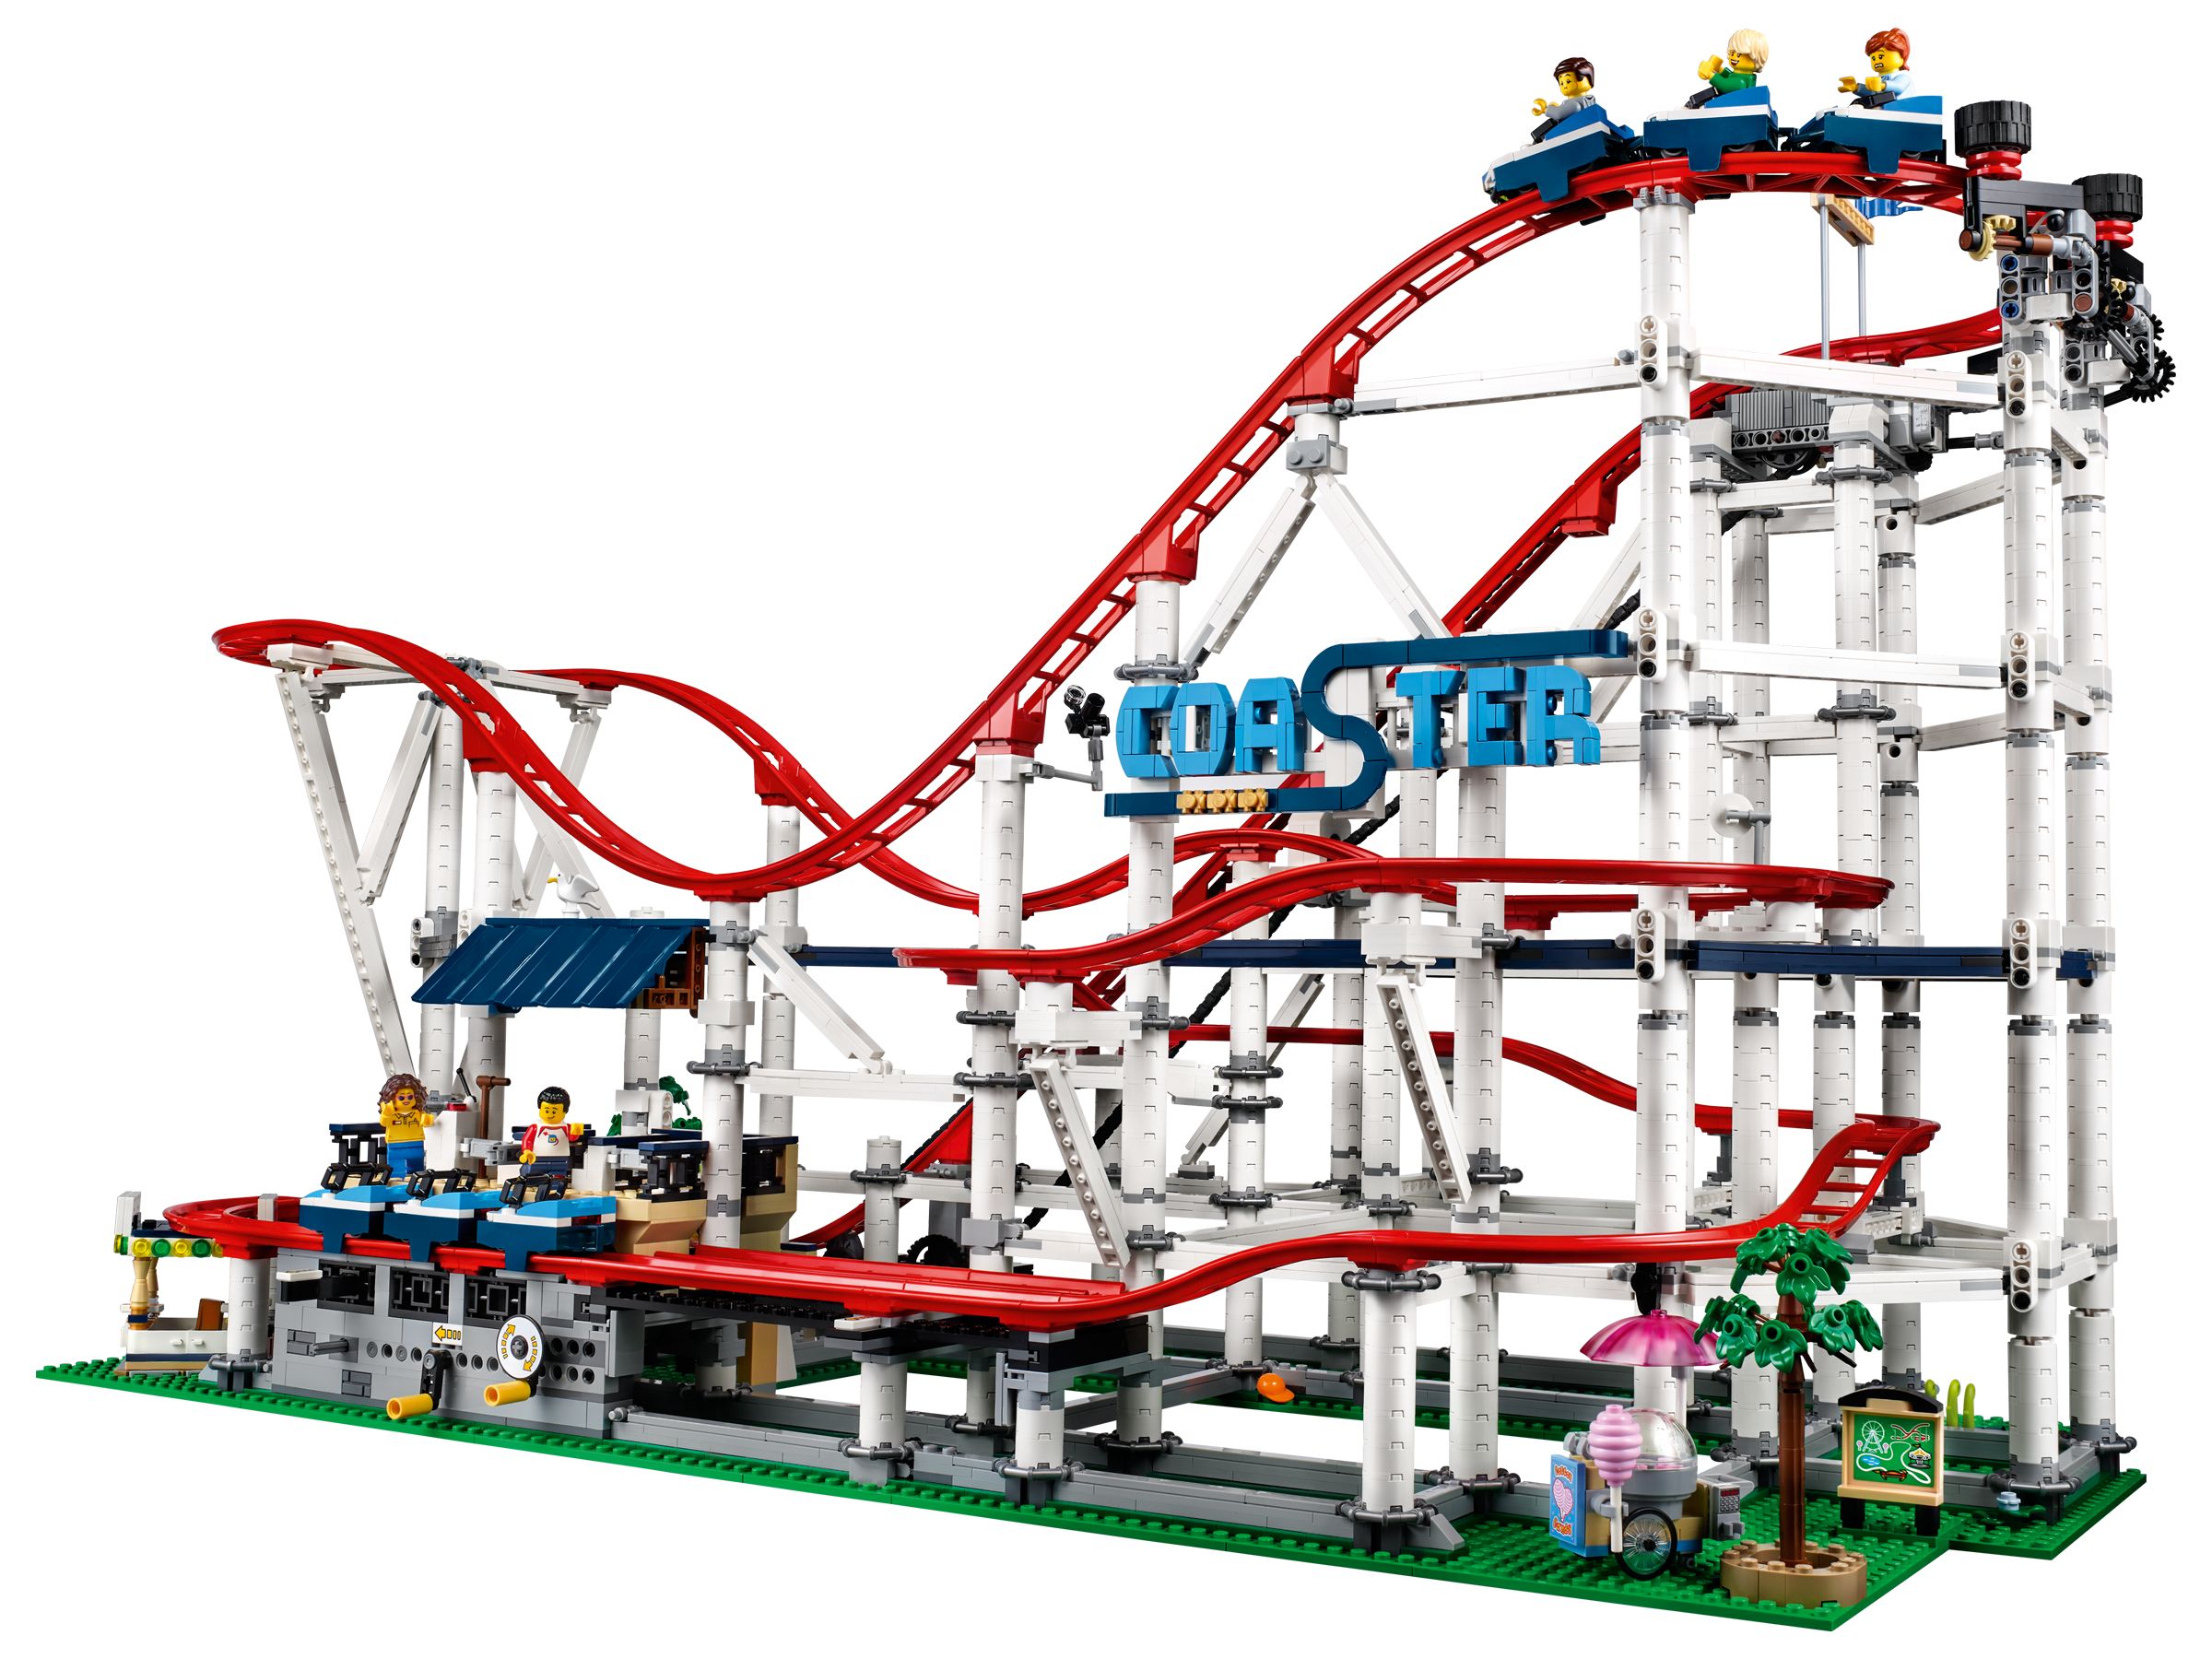 LEGO Advanced Models 10261 Achterbahn LEGO_10261_alt2.jpg